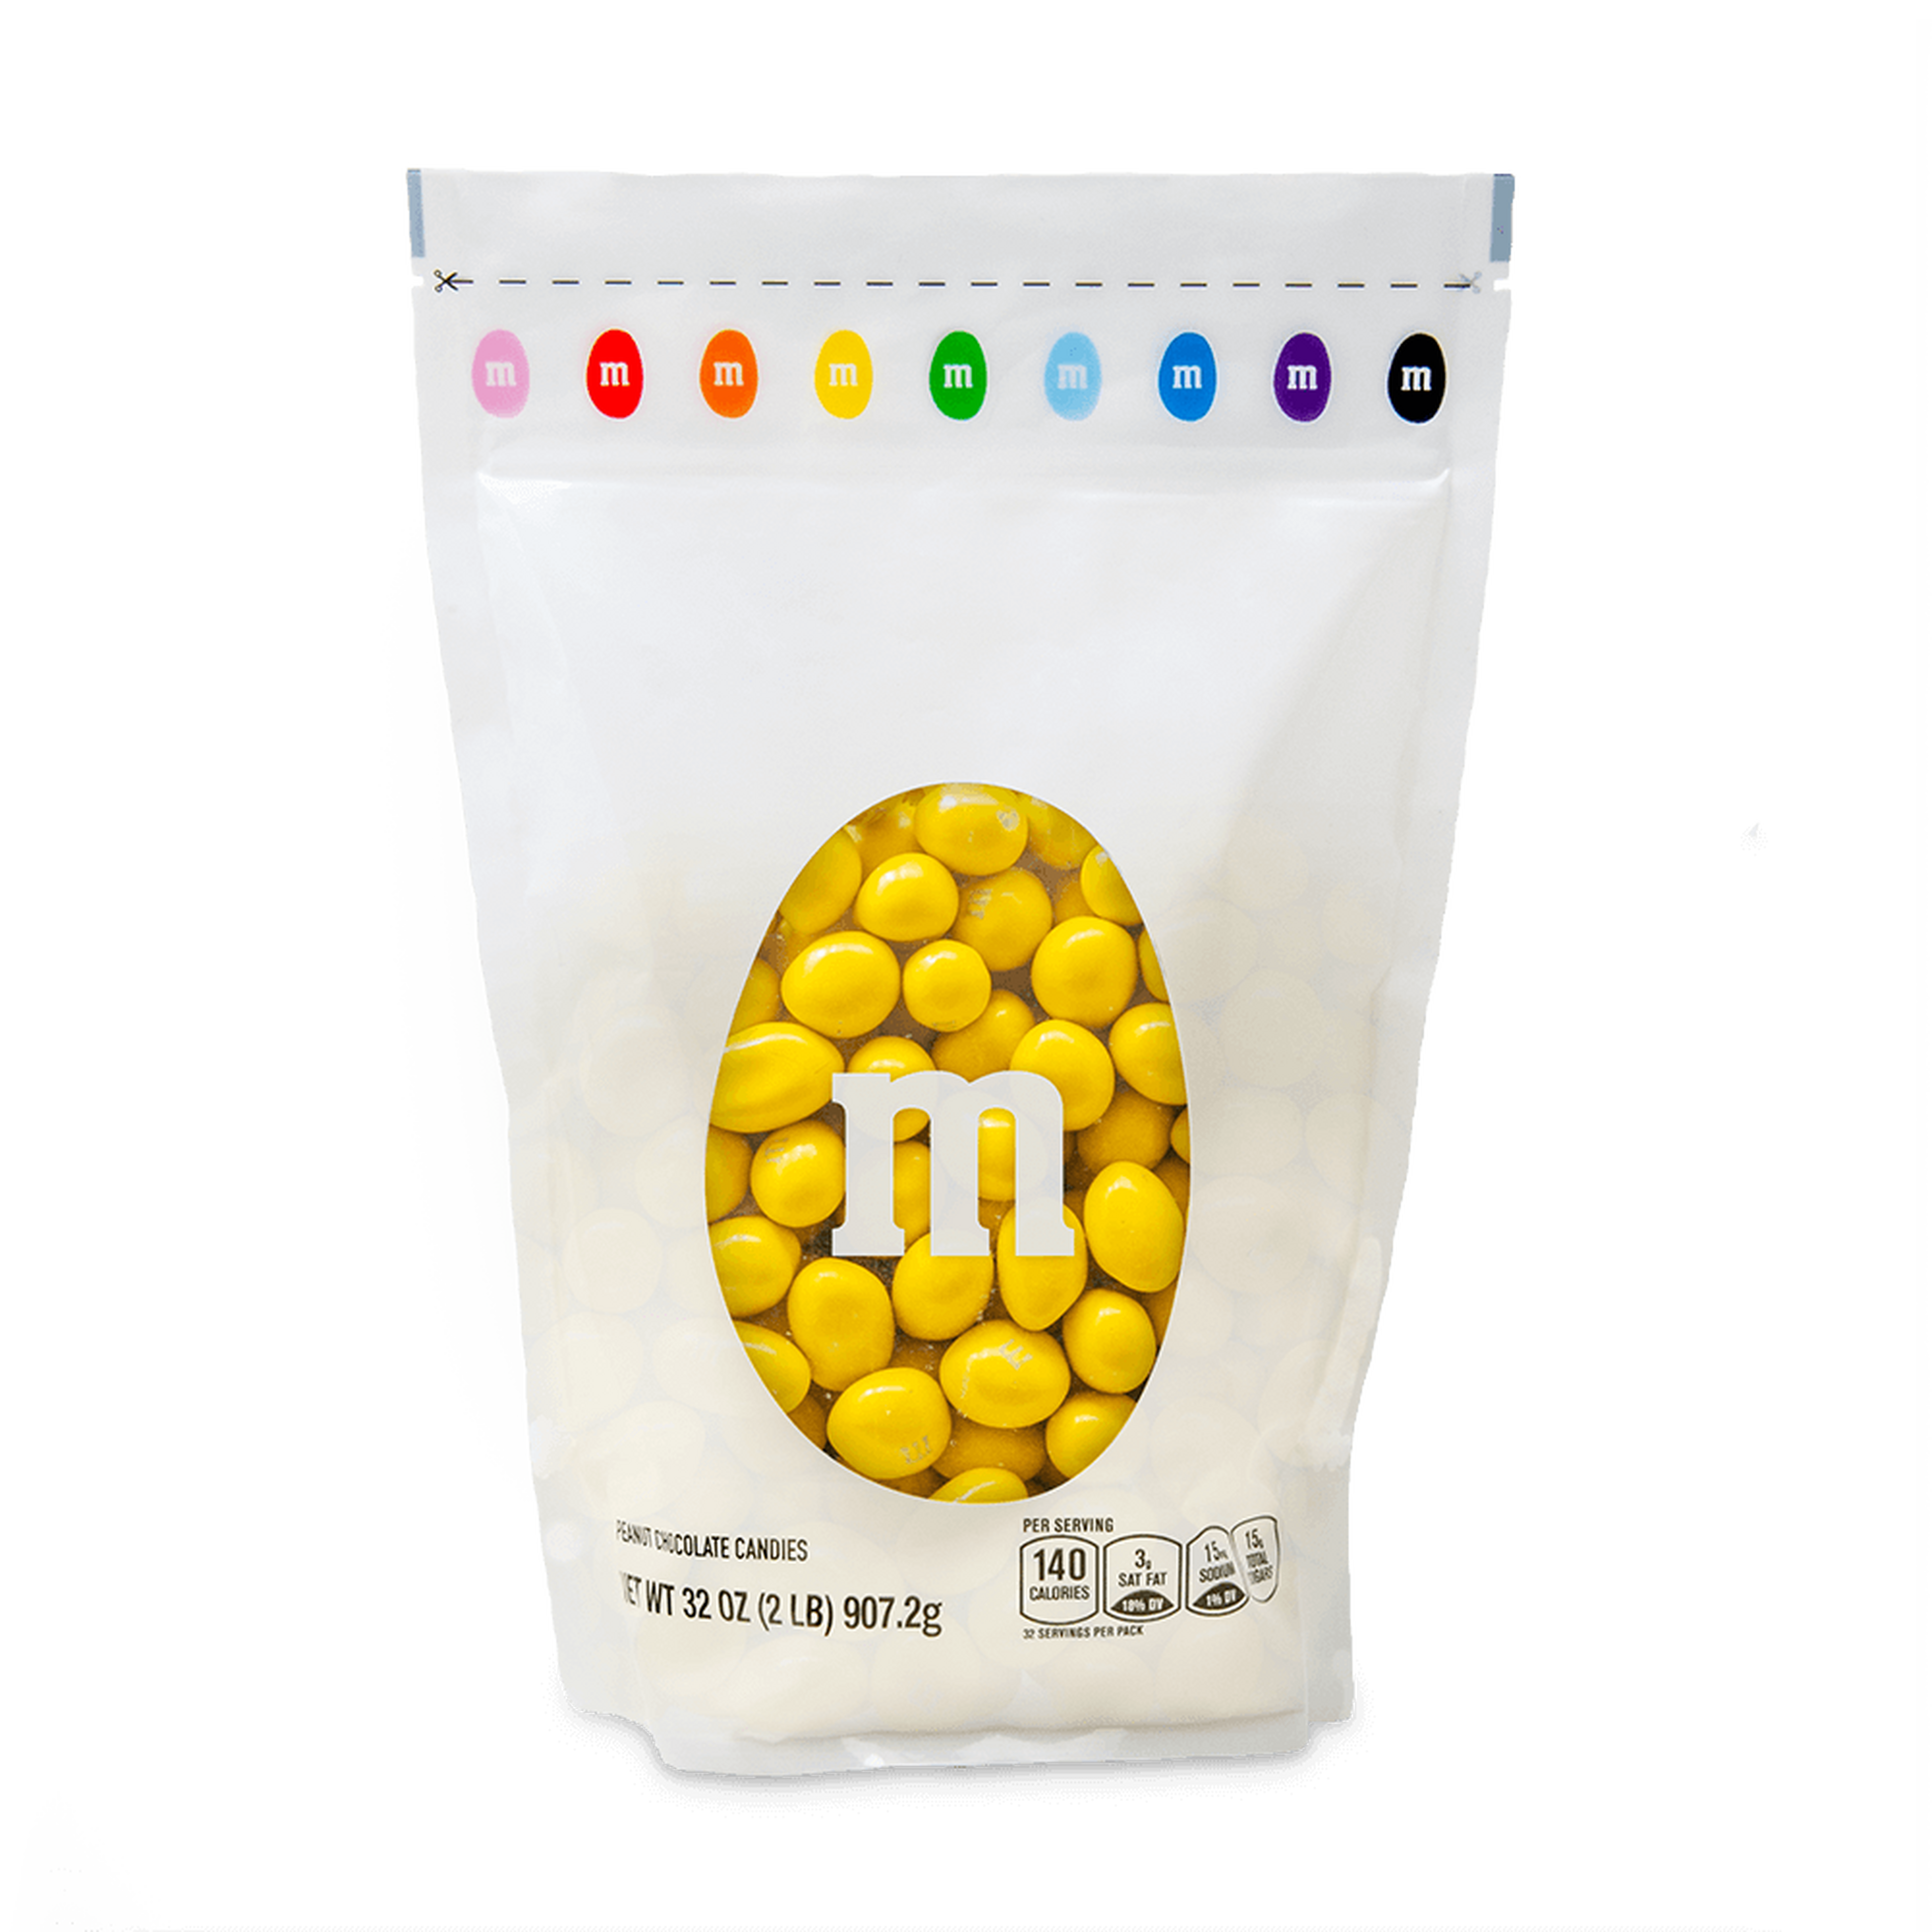 Peanut M&M'S Yellow Candy 0